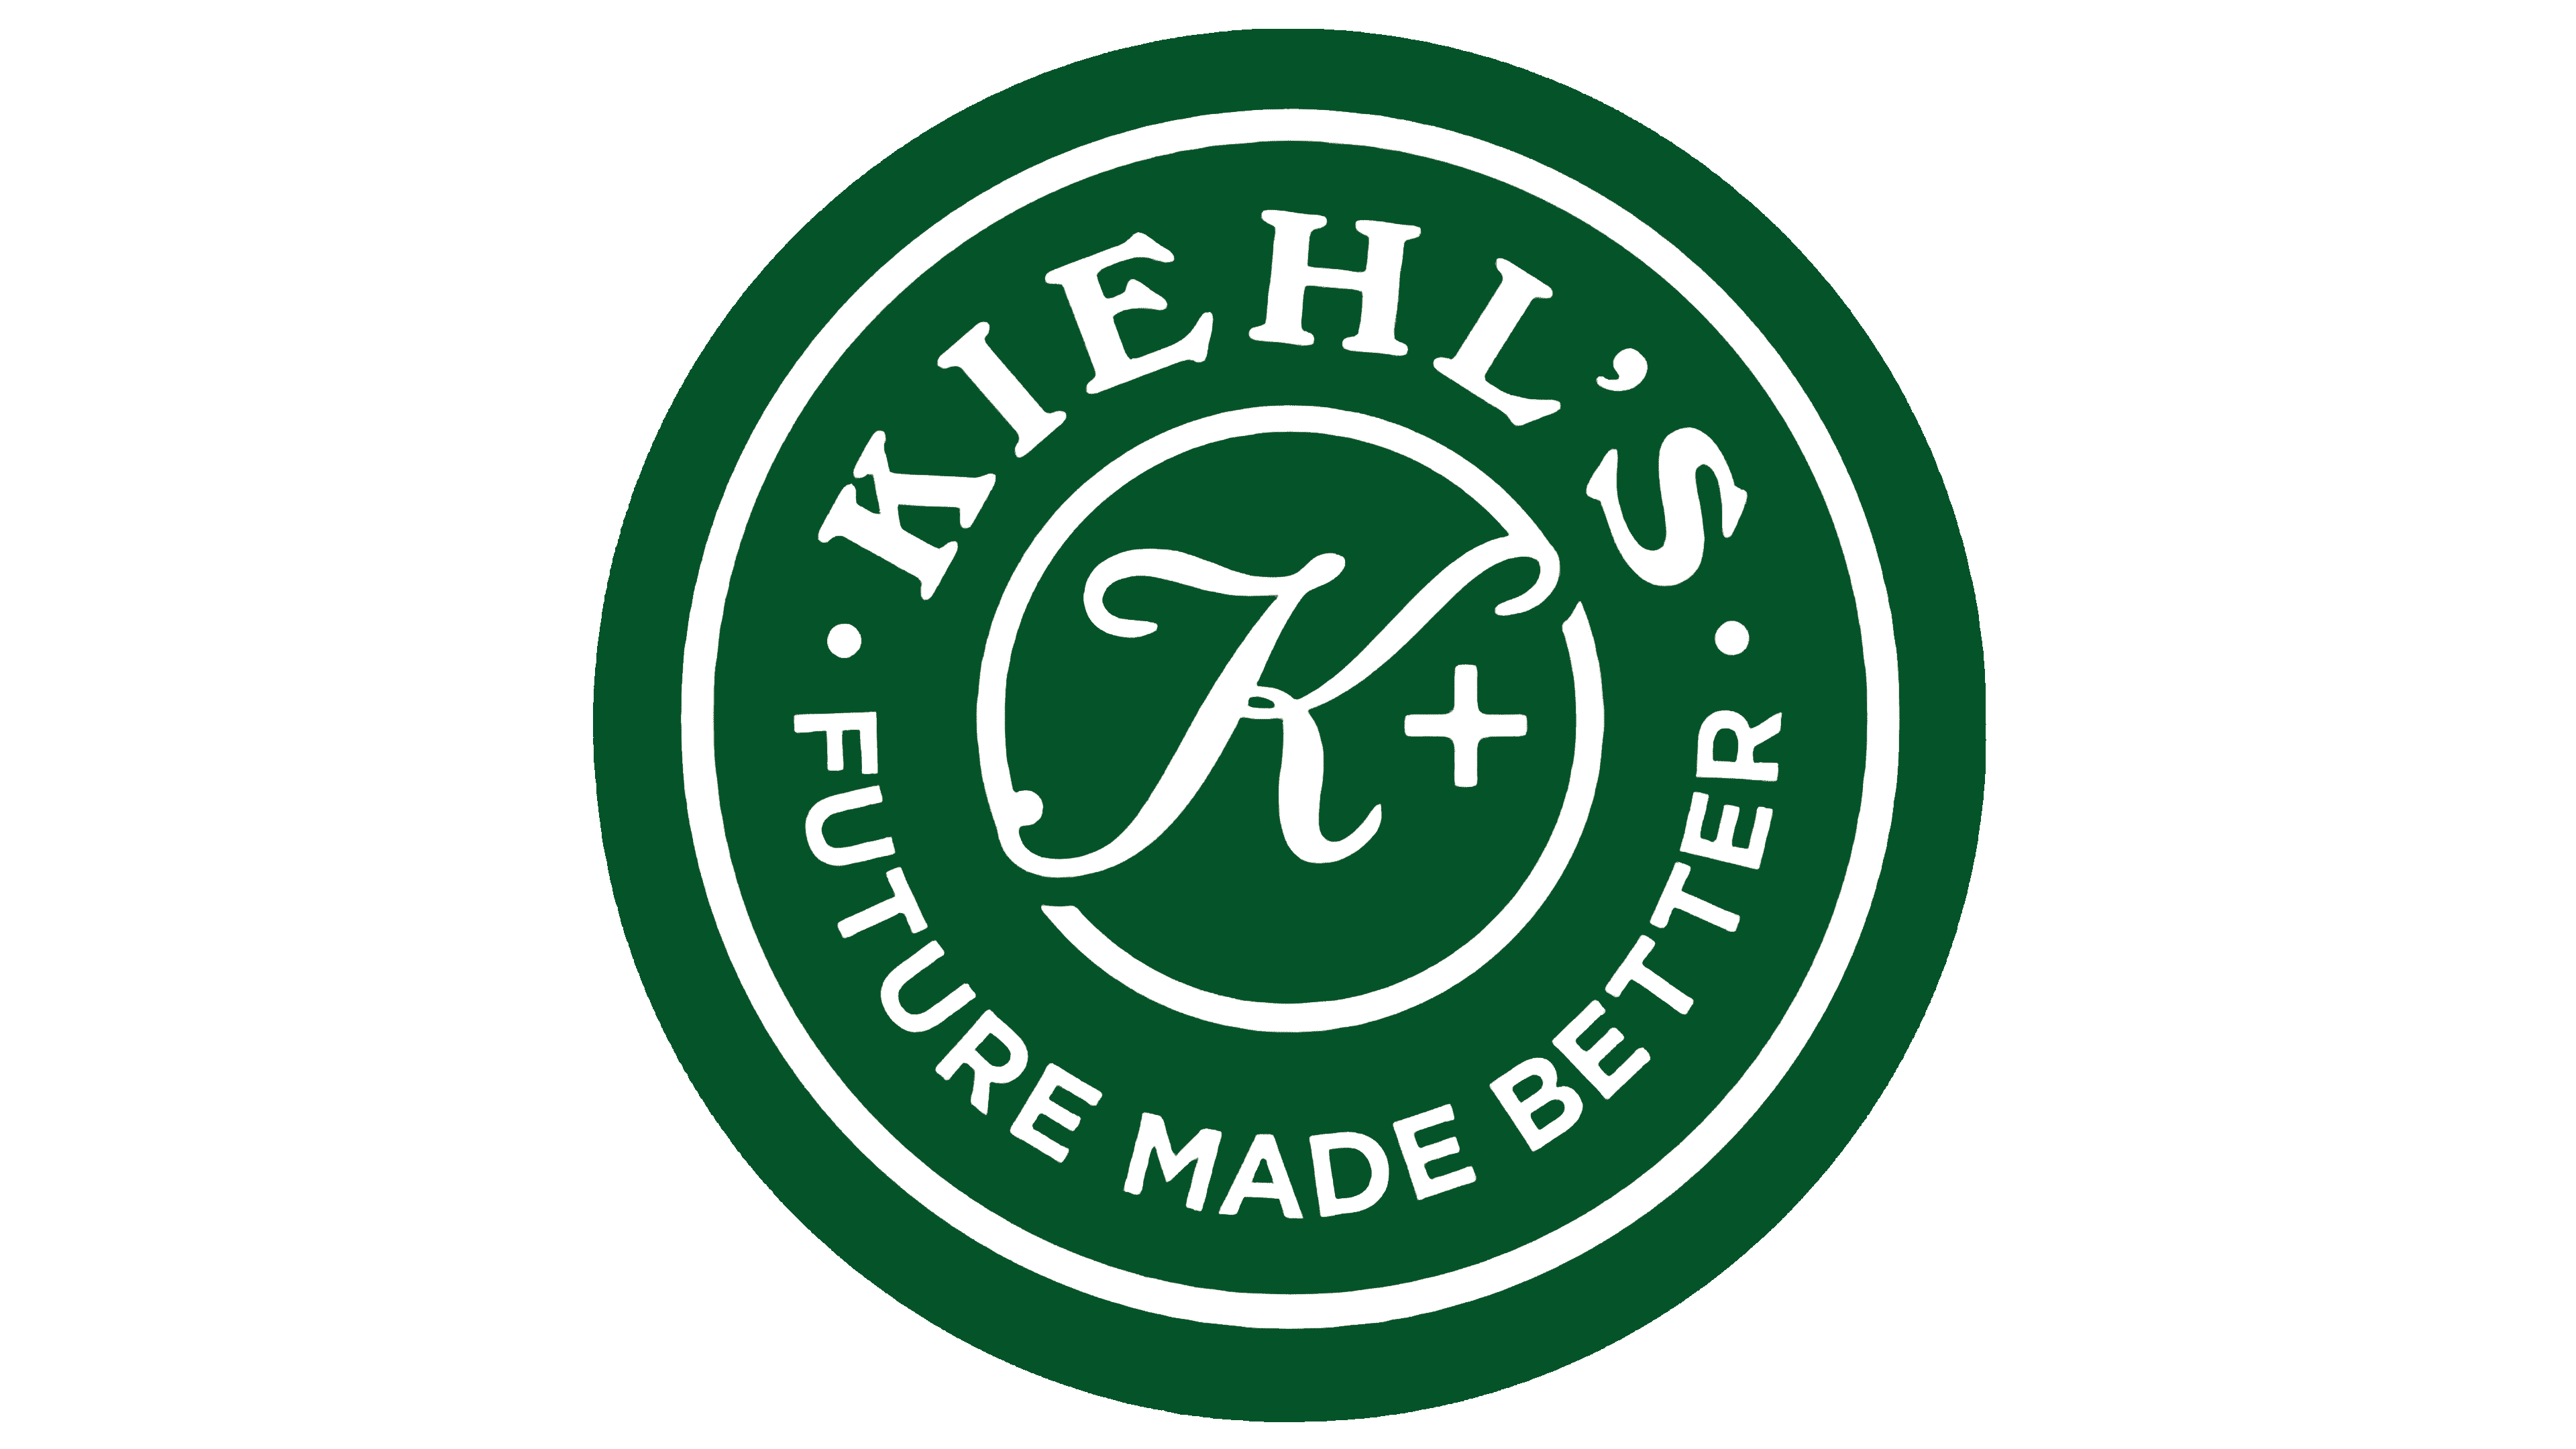 Kiehls Logo, symbol, meaning, history, PNG, brand